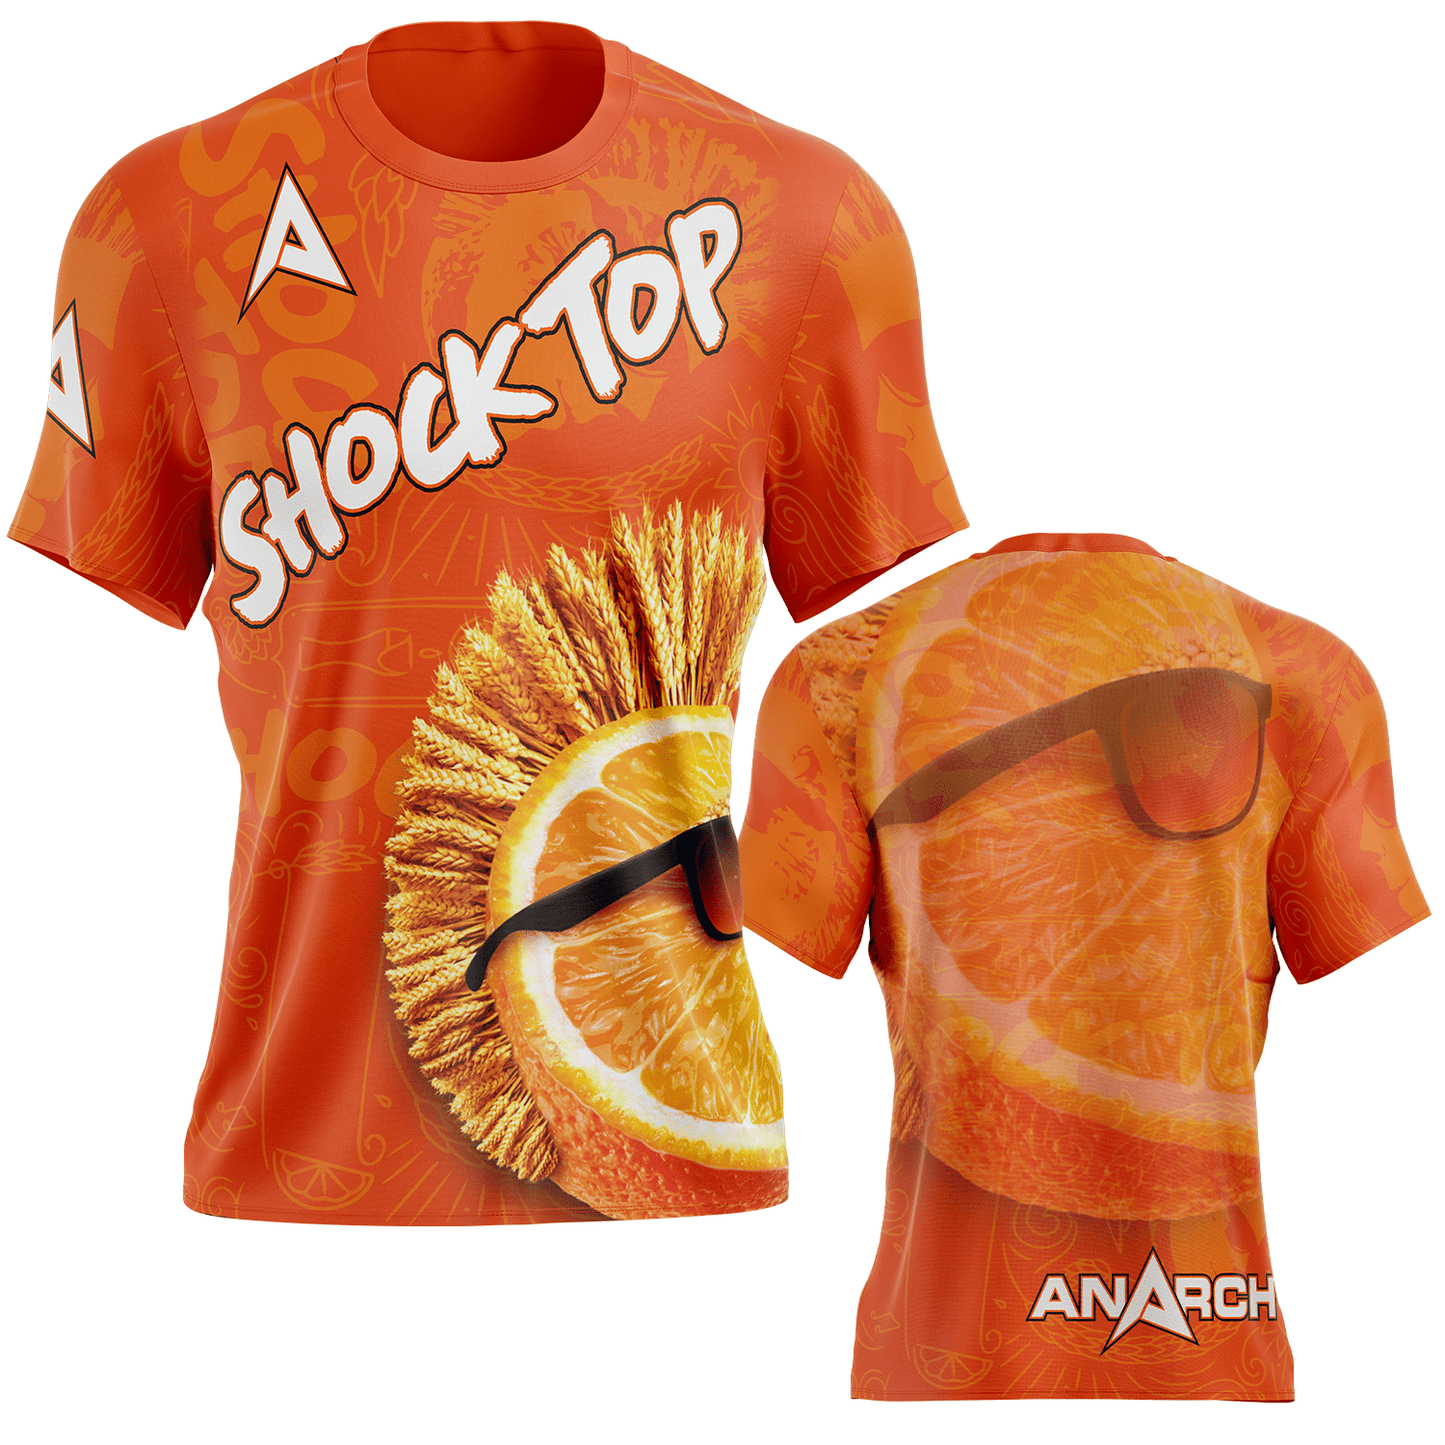 Anarchy Shock Top Short Sleeve Shirt